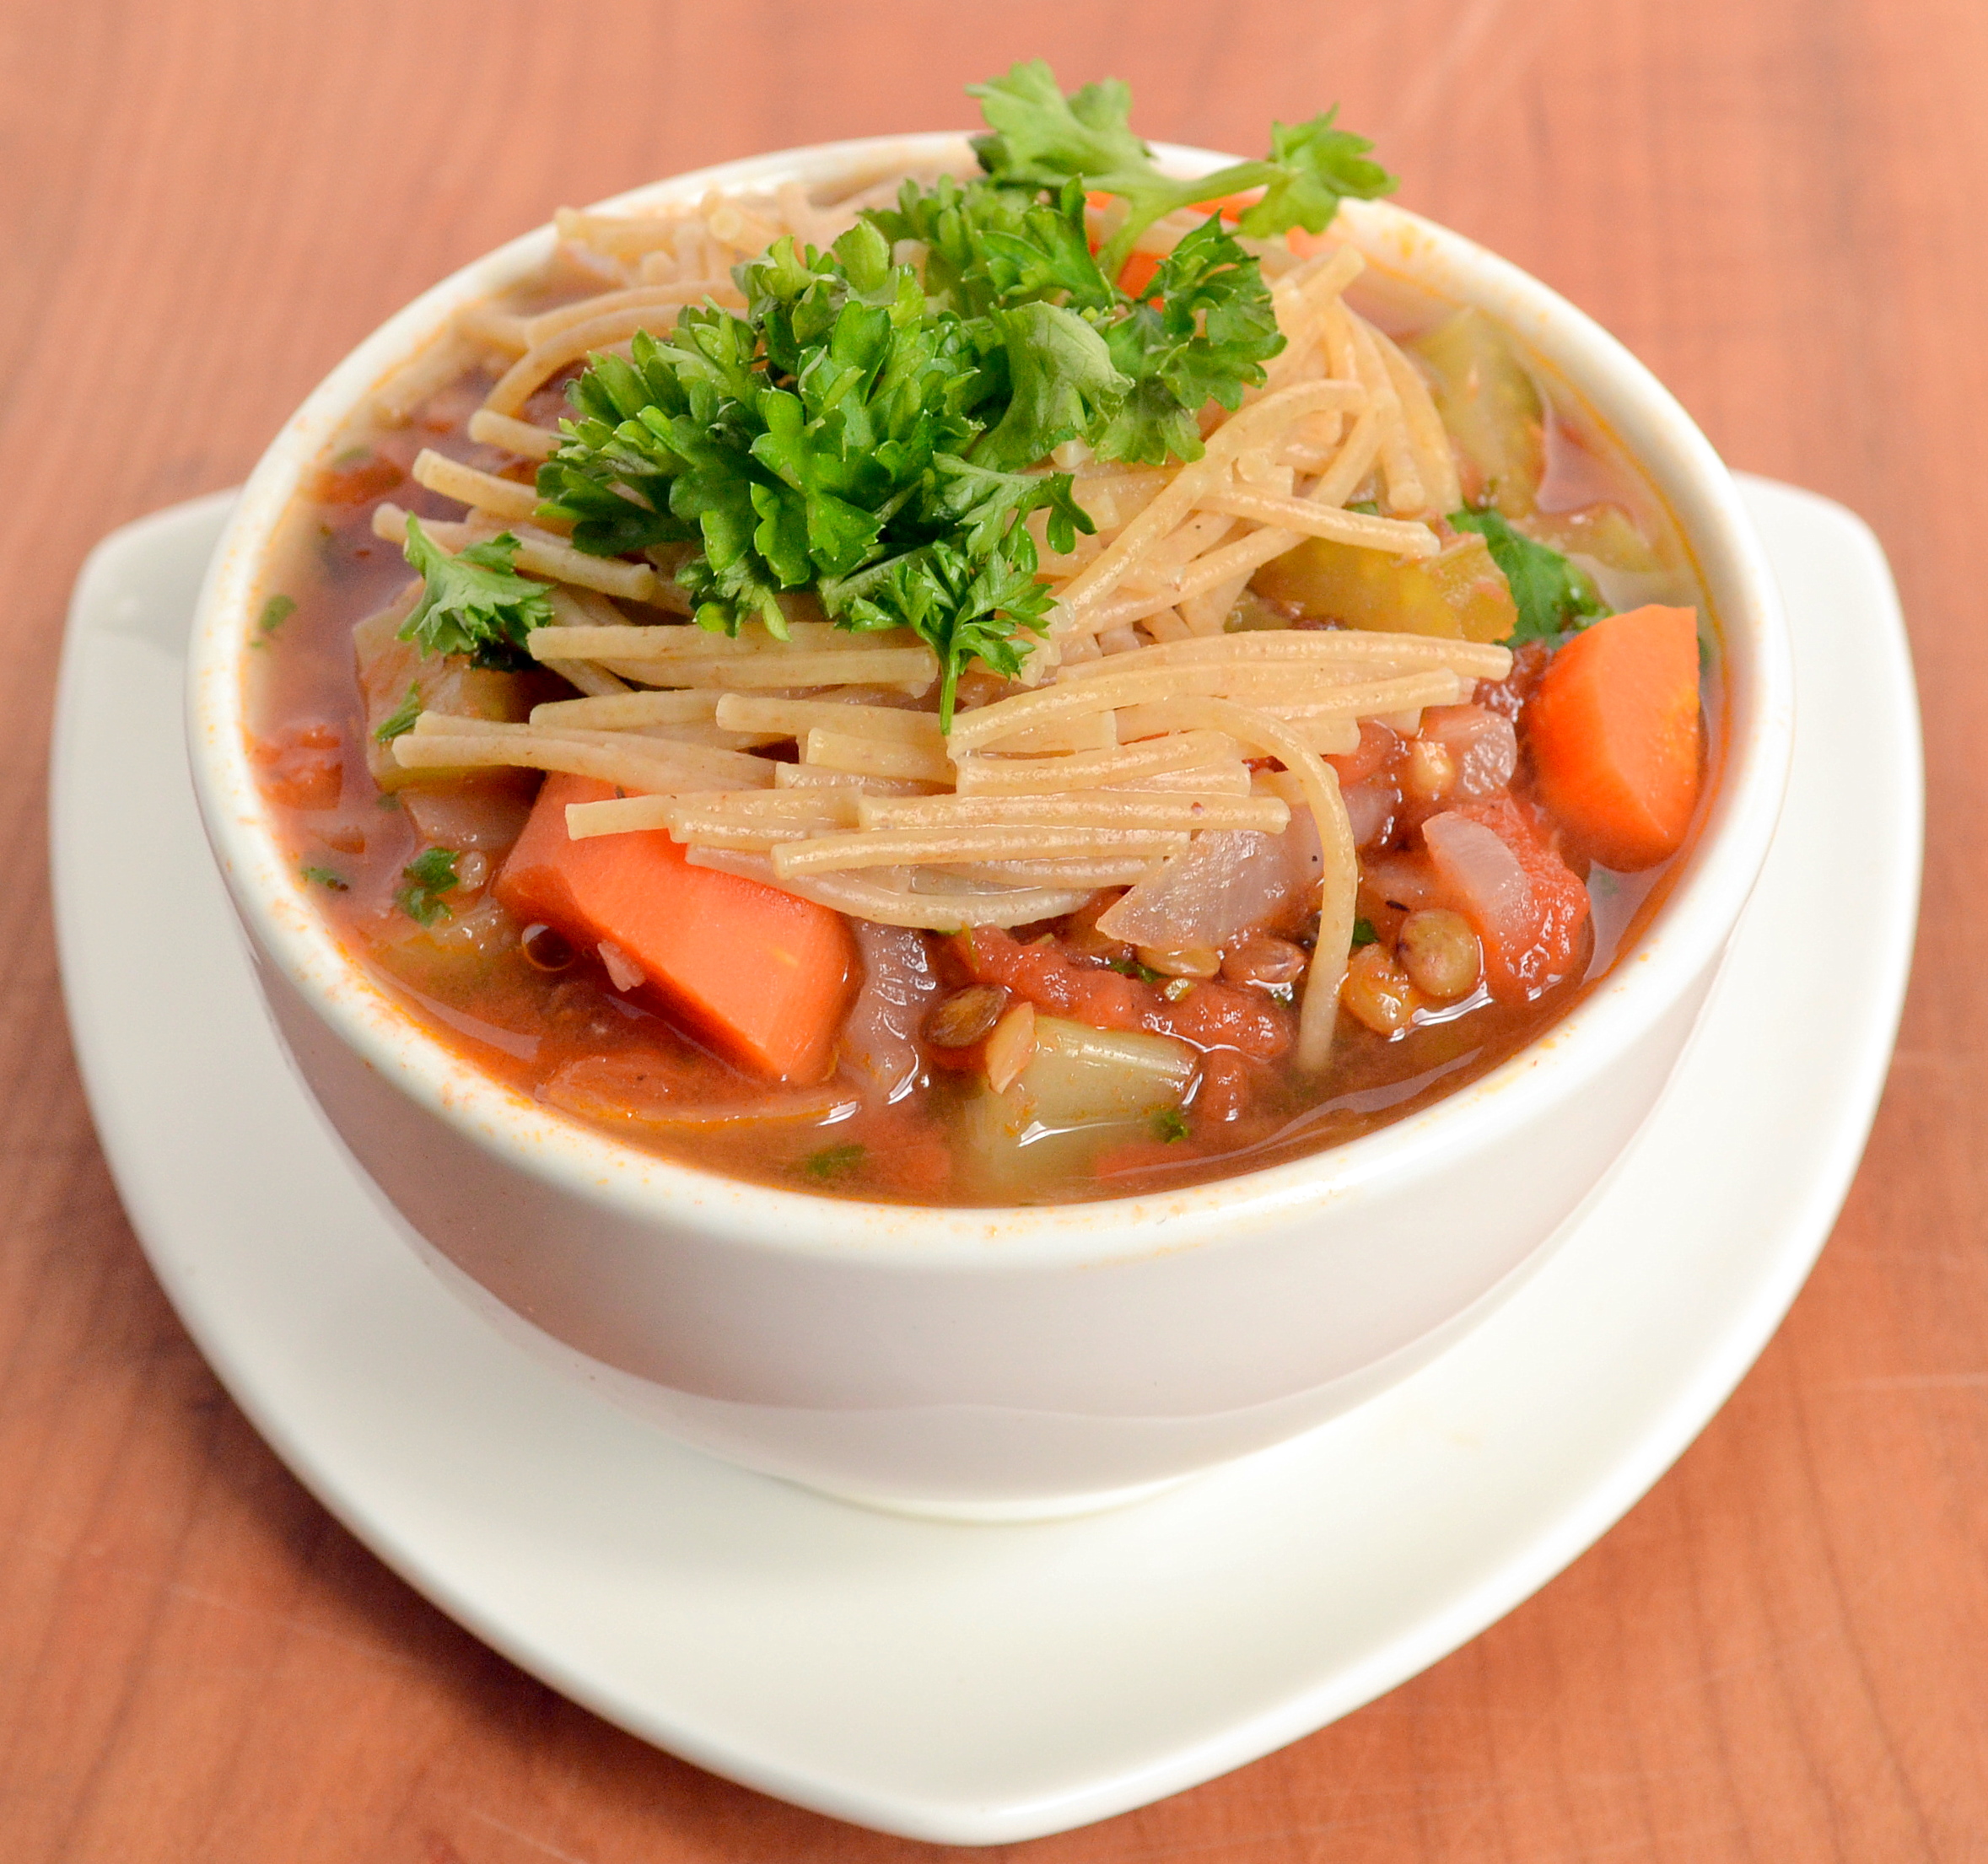 Lentil Vegetable Stew